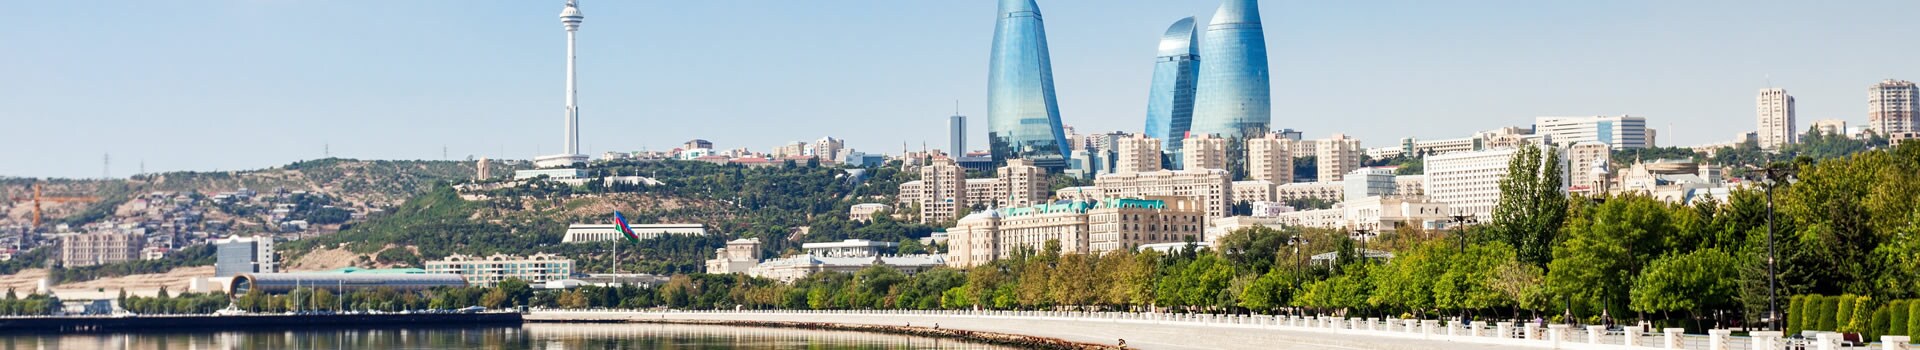 Azerbaidzan